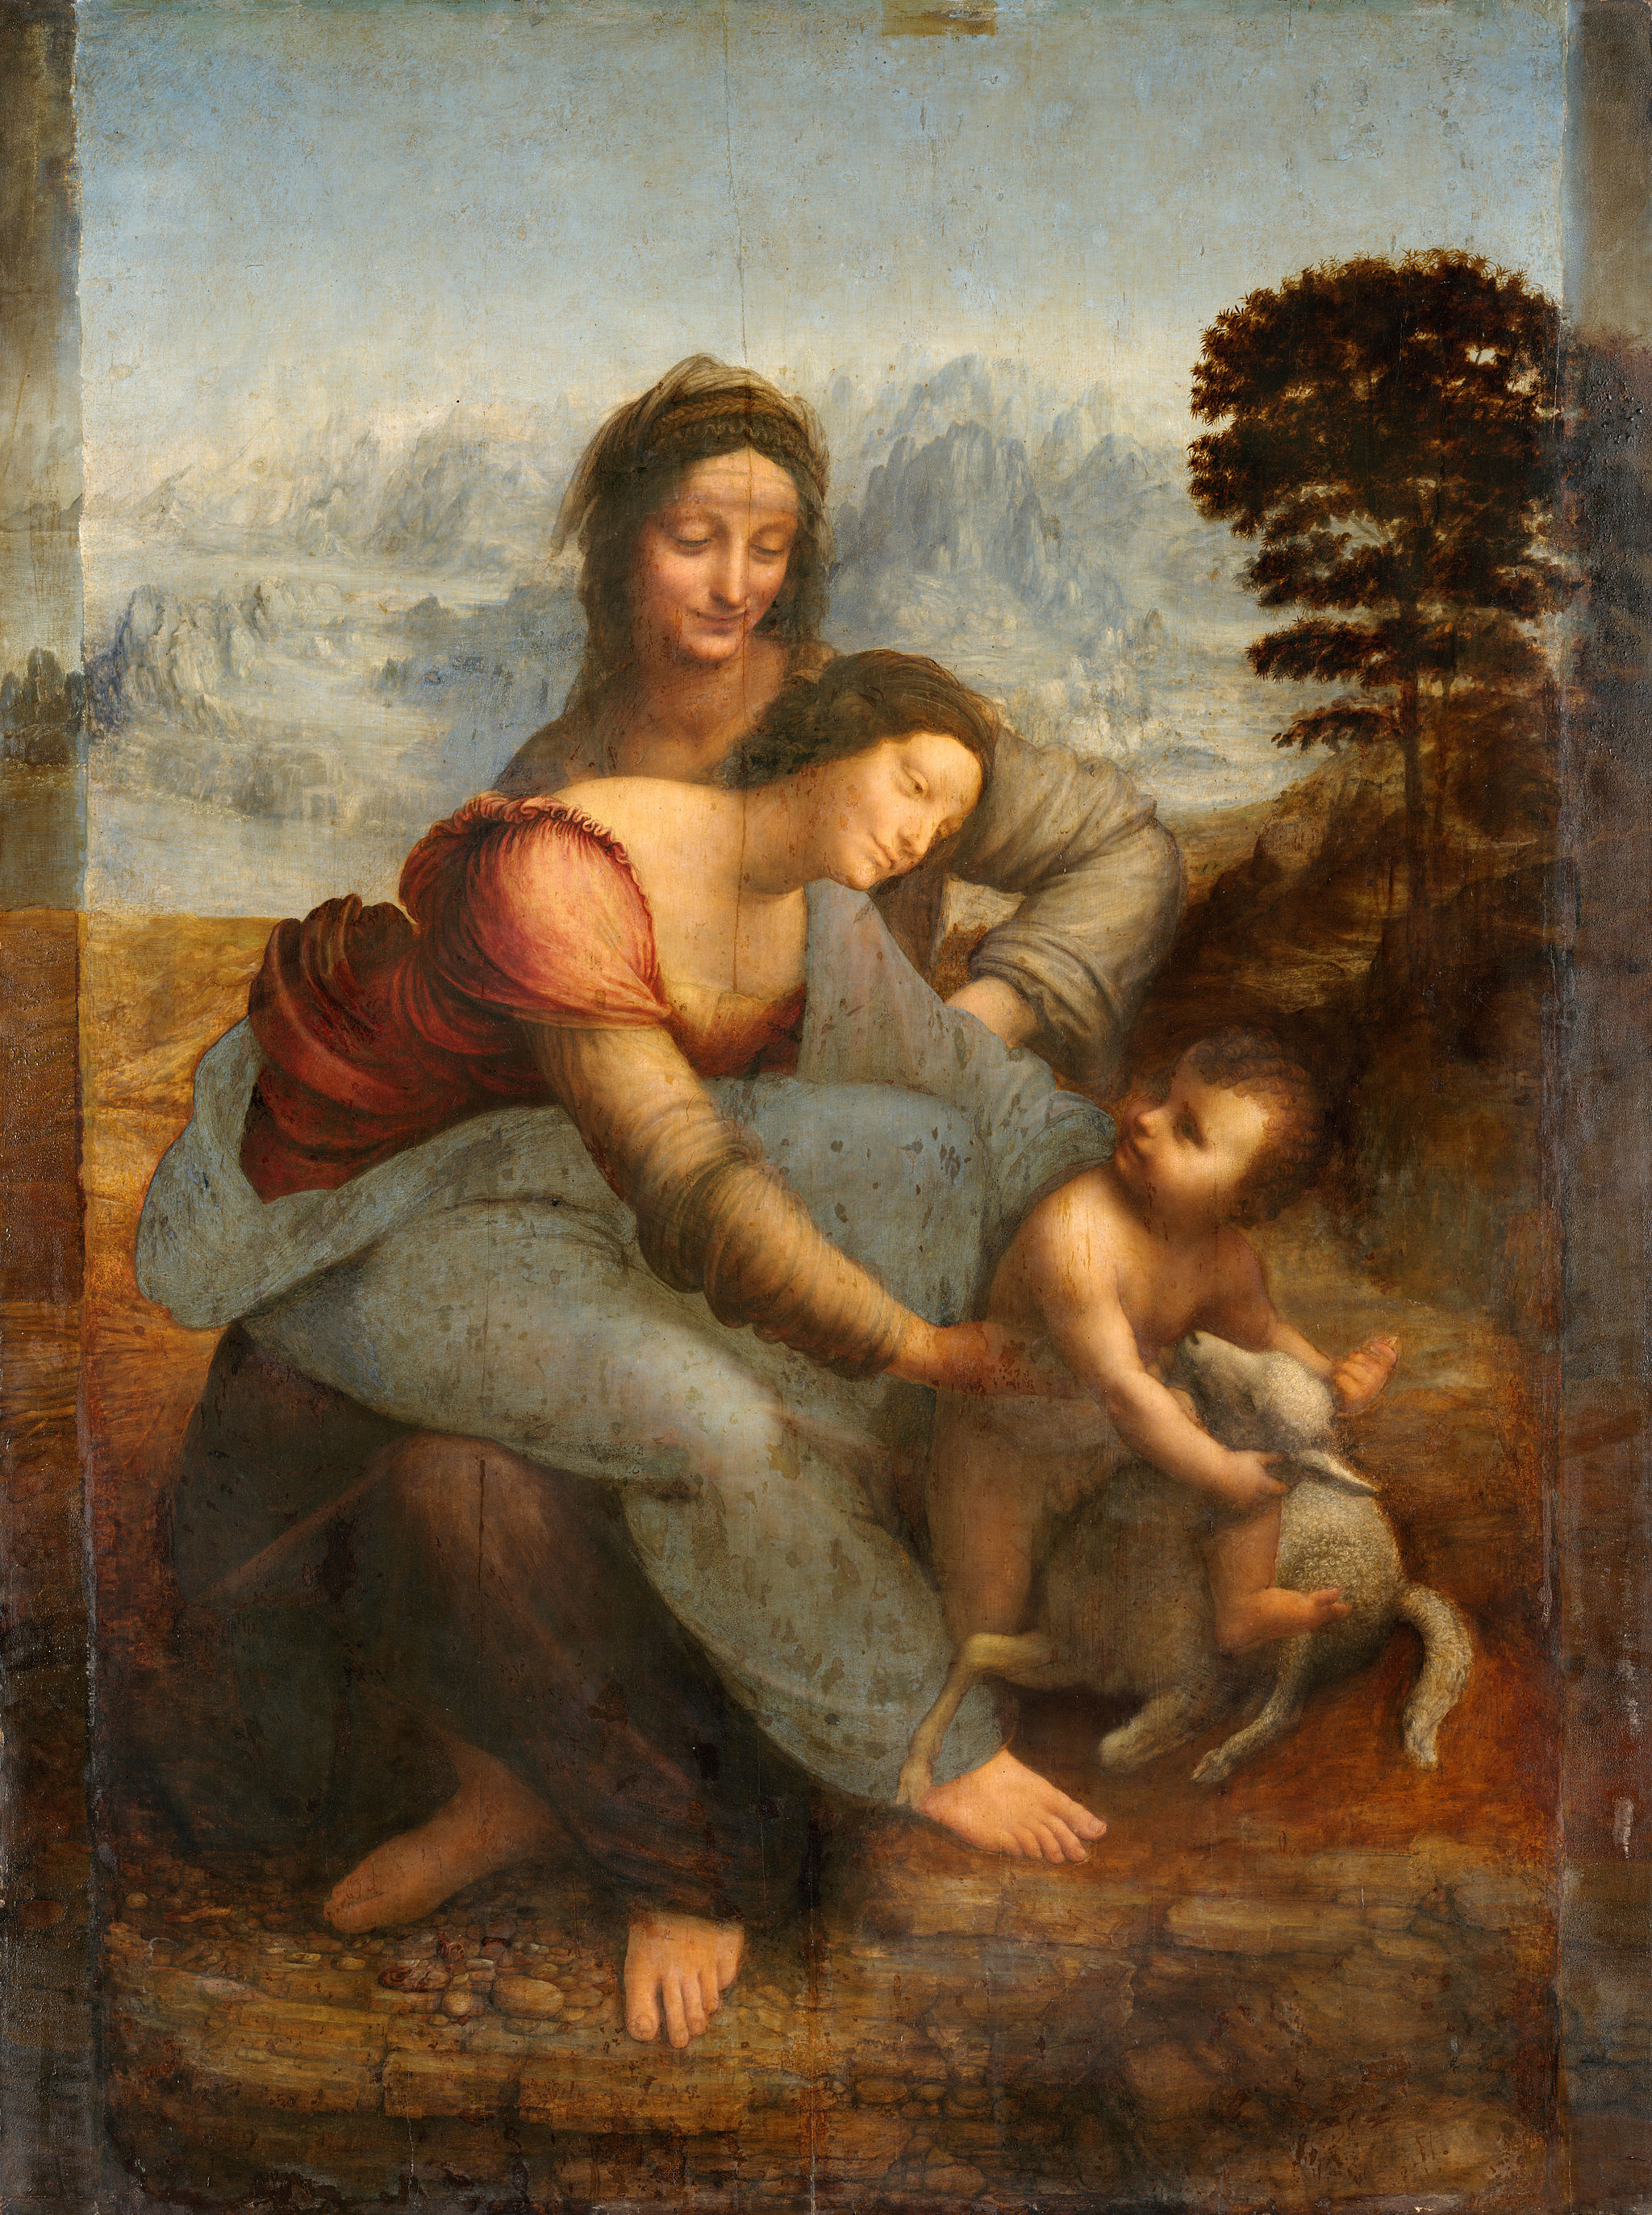 Obraz svaté Anny, pranostiká říká: Svatá Anna, chladno z rána